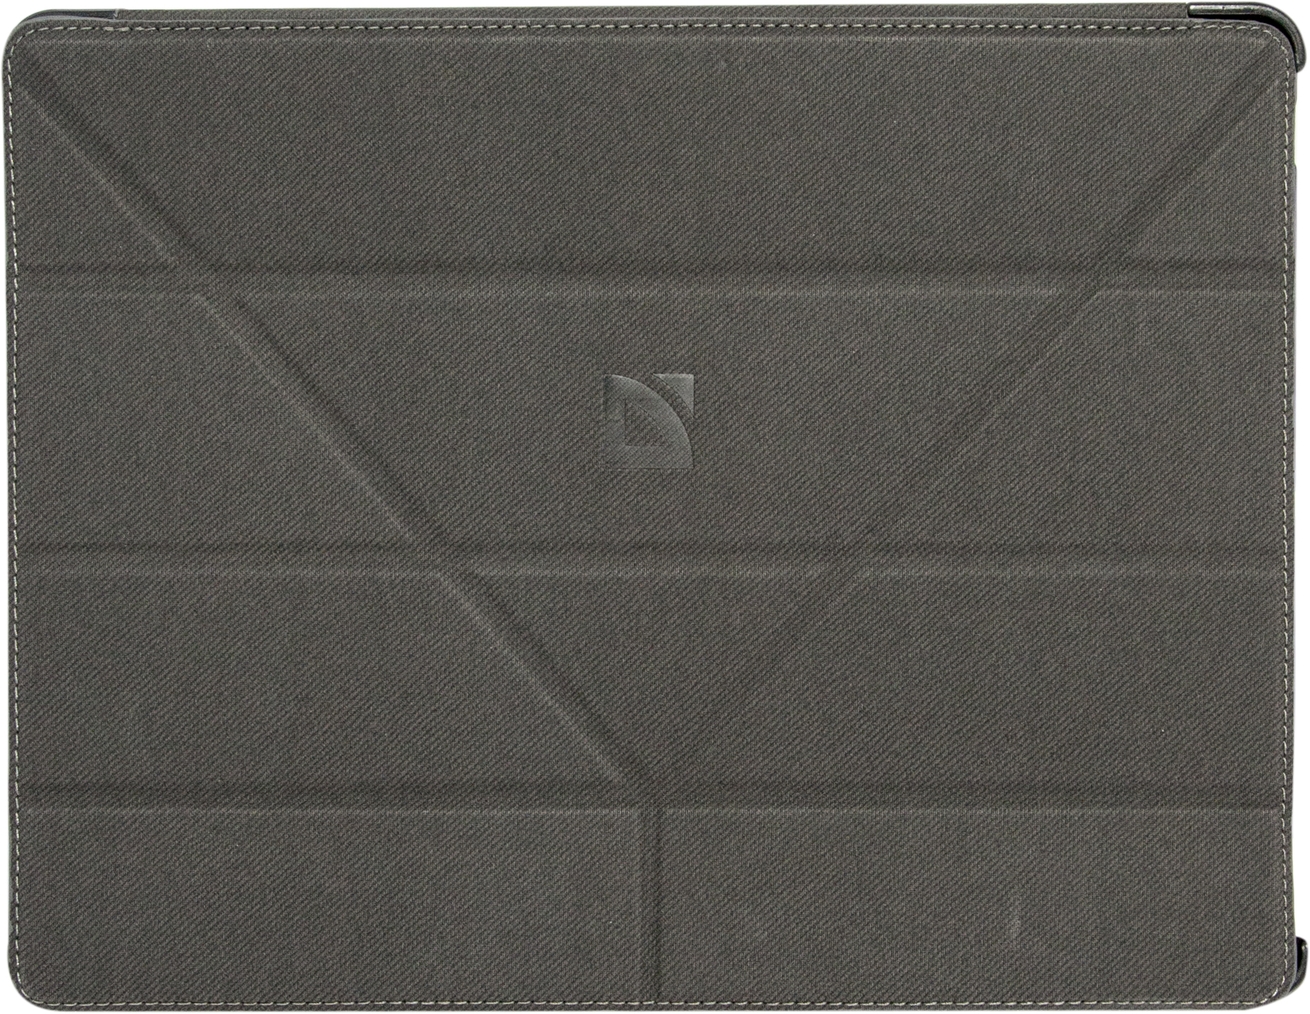 Чехол для планшета Defender Smart Case 9.7 серый, для iPad 2/3/4;0;0;
00016357;Чехол для планшета 10.0